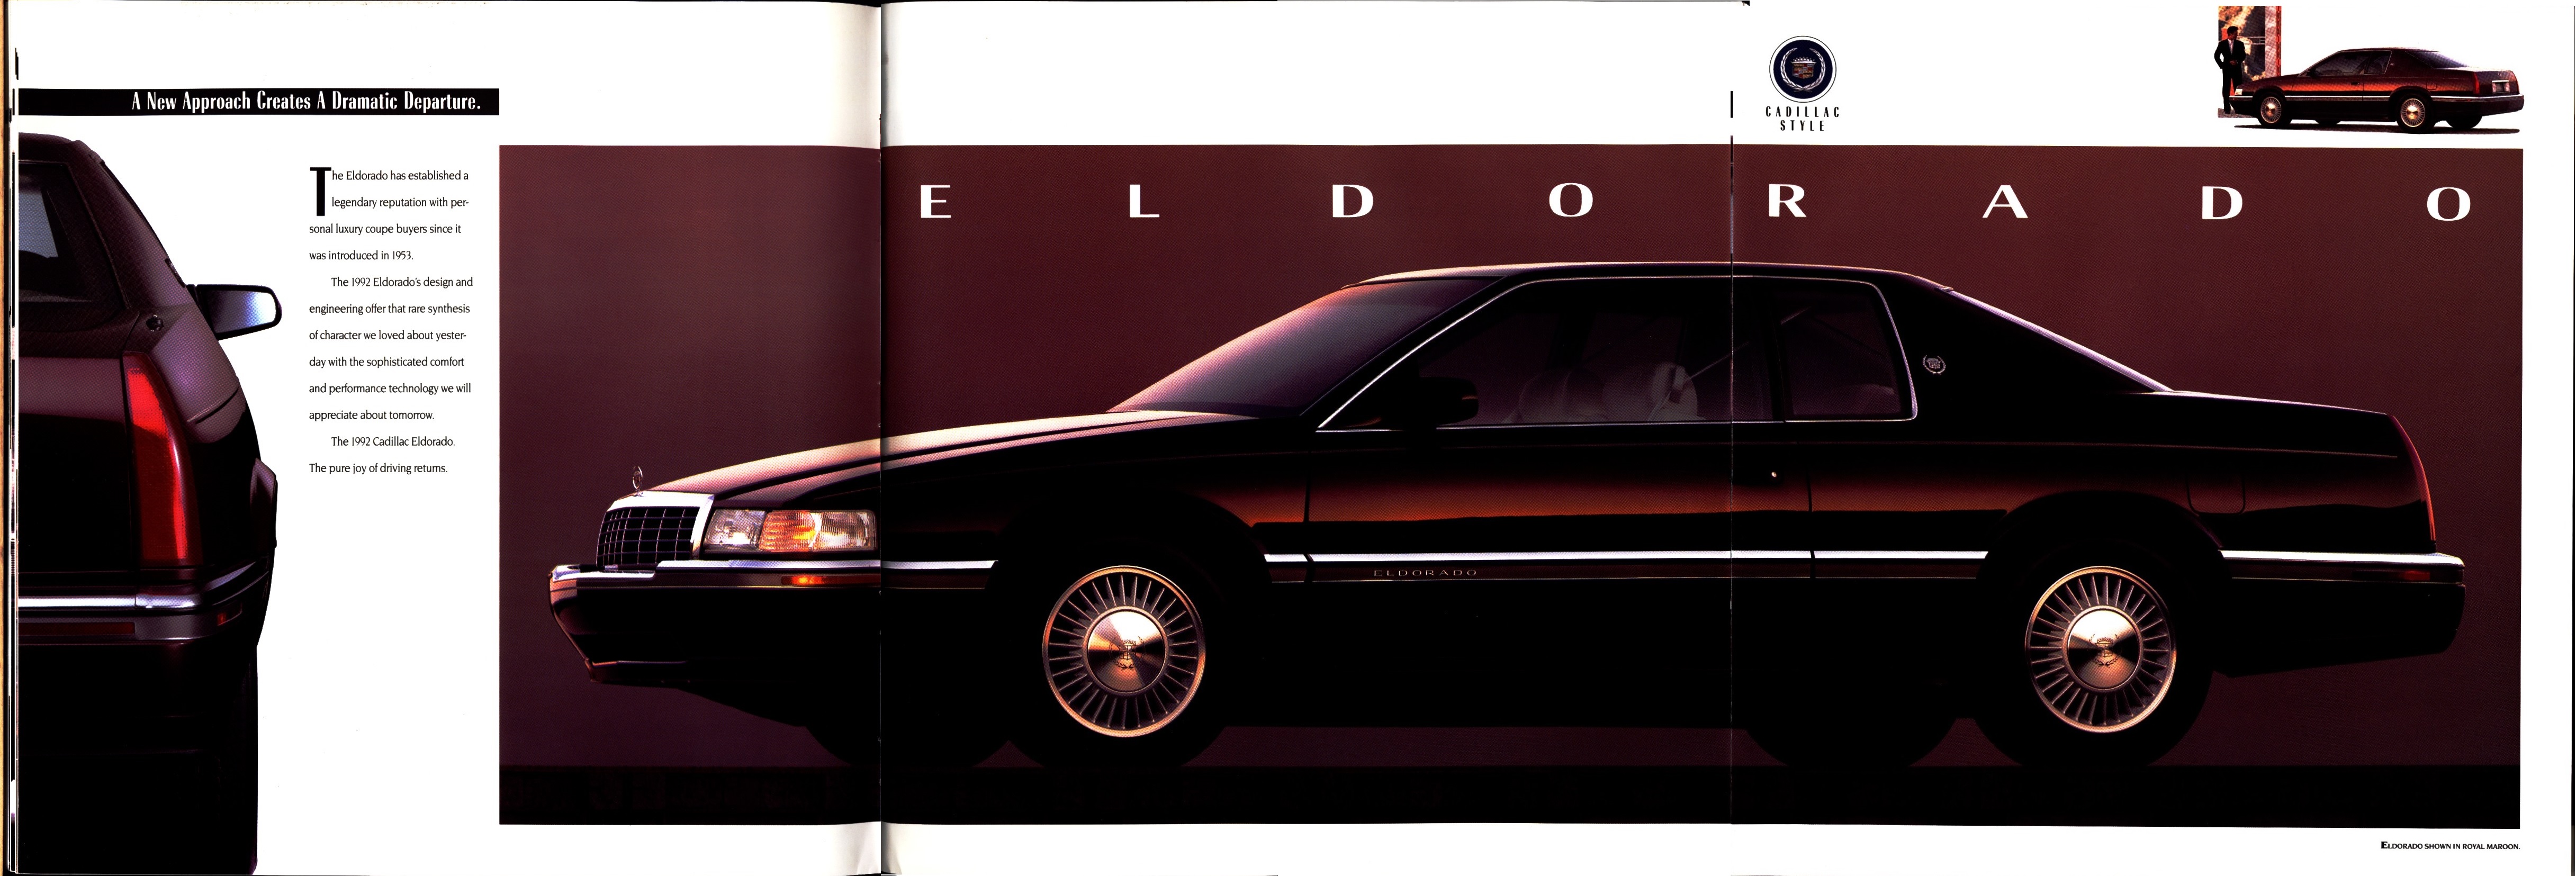 1992 Cadillac Full Line Prestige Brochure 28a-28b-28c